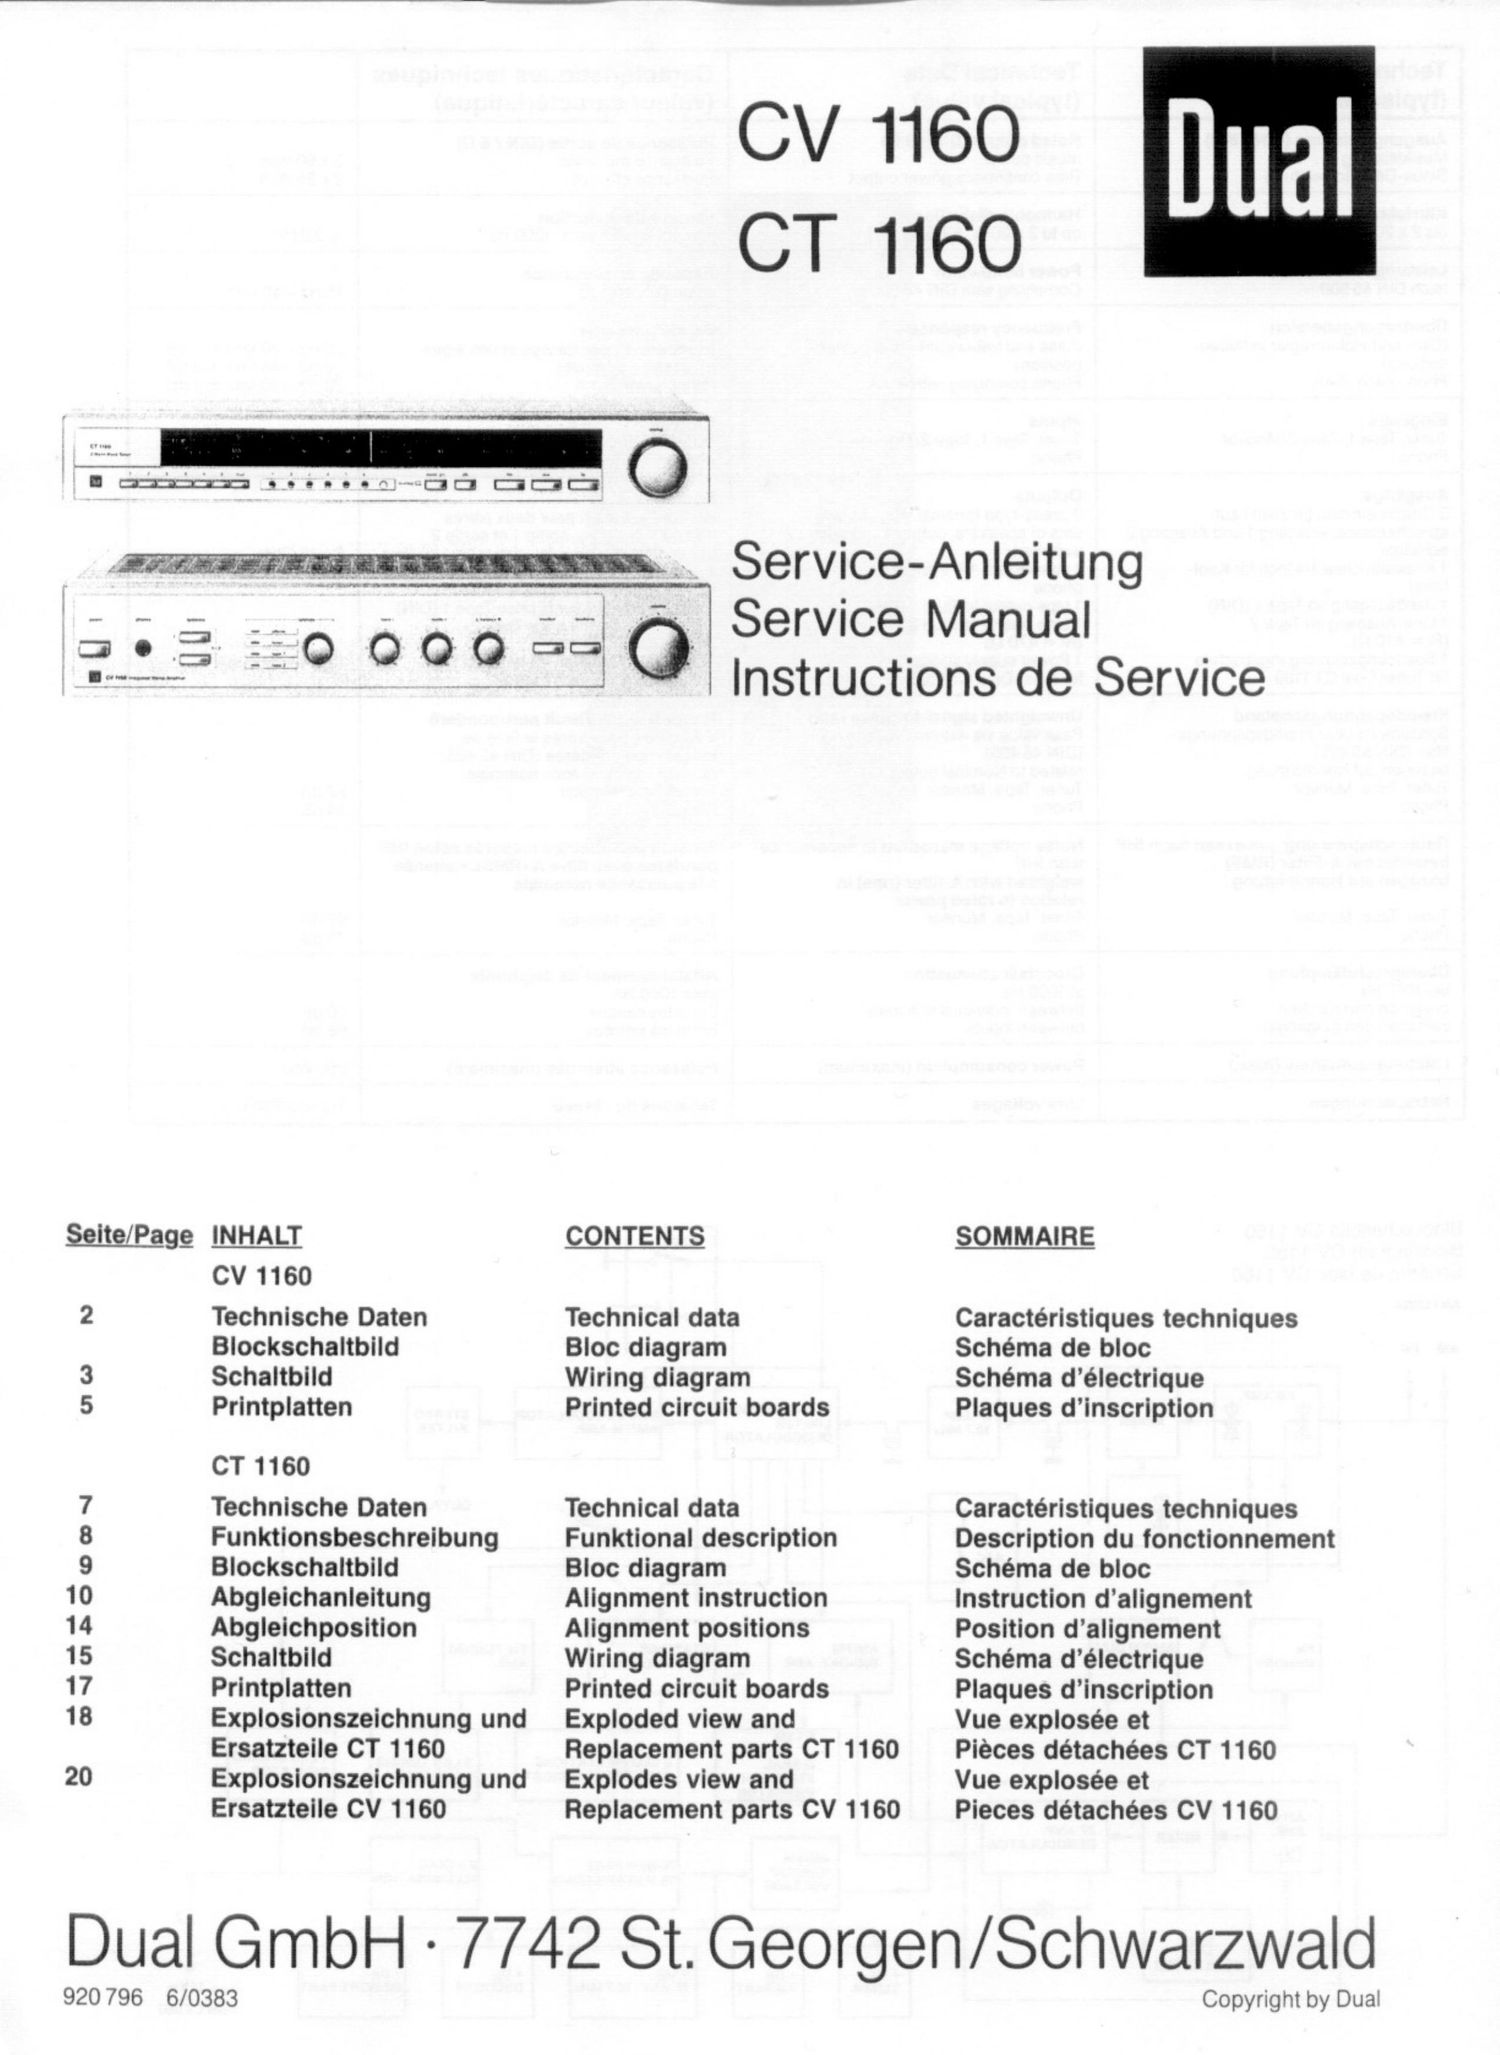 Dual CV 1160 CT 1160 Service Manual (1)